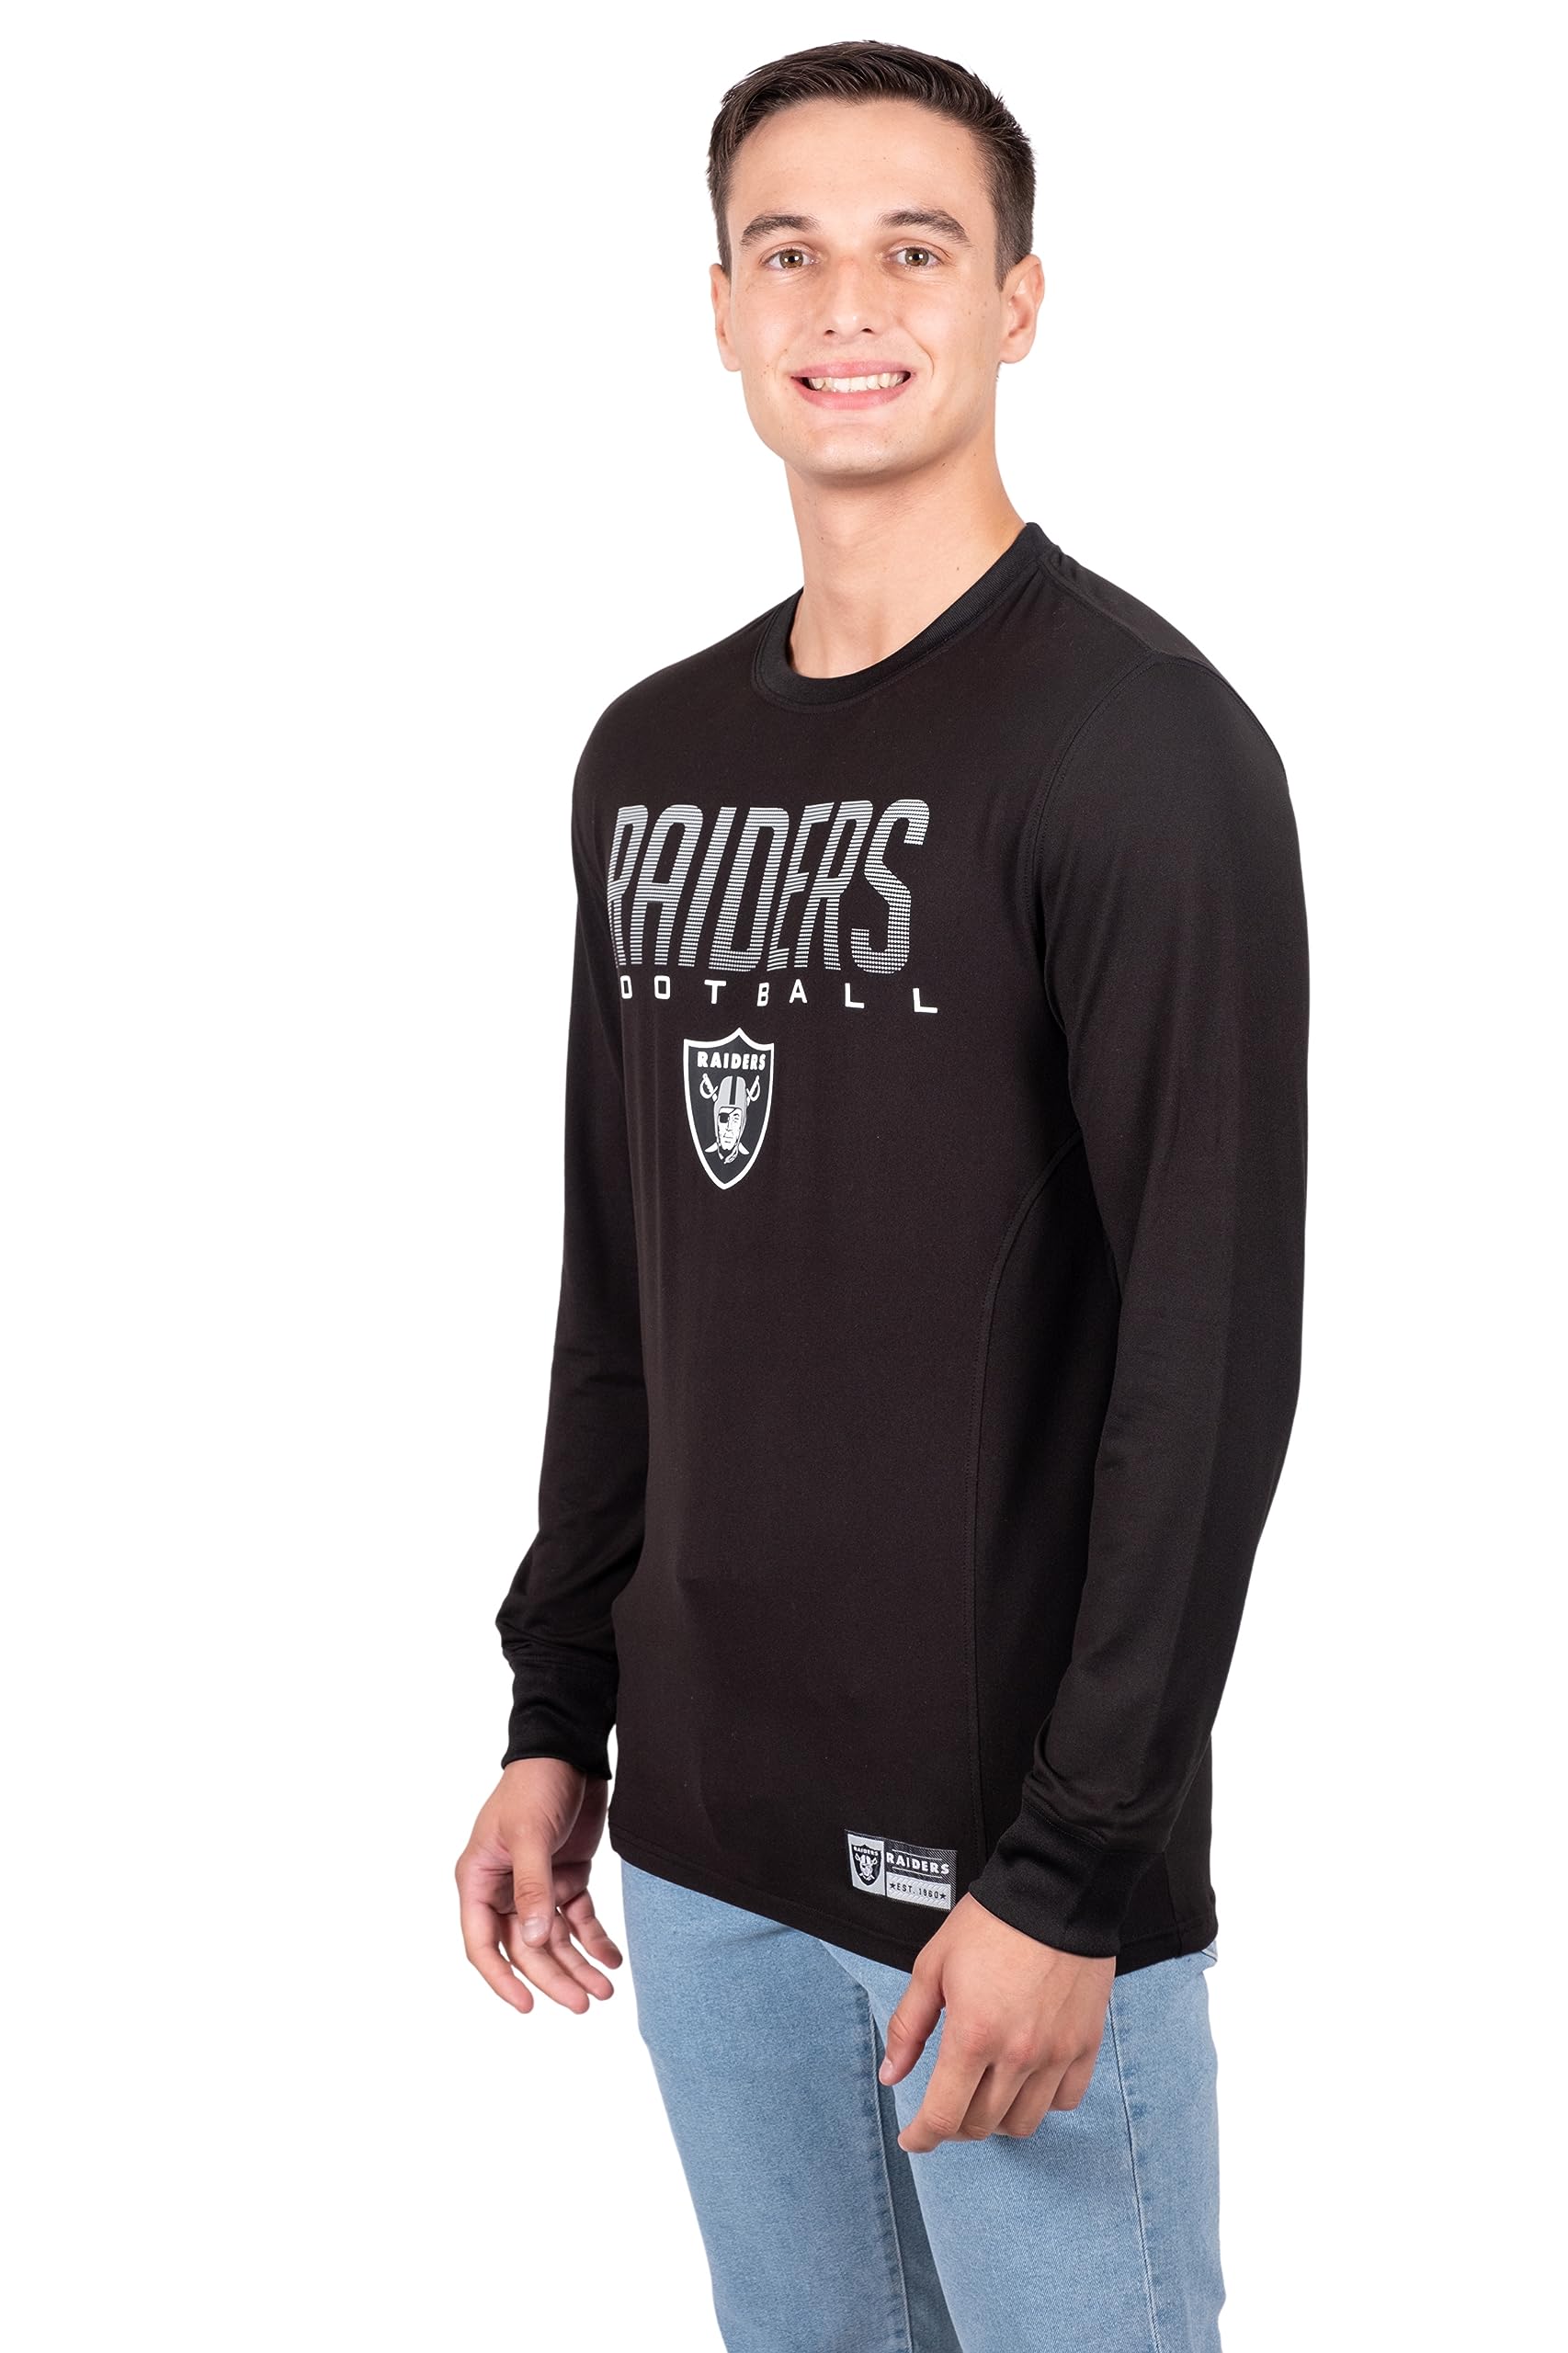 Ultra Game NFL Las Vegas Raiders Mens Active Lightweight Quick Dry Long Sleeve T-Shirt|Las Vegas Raiders - UltraGameShop